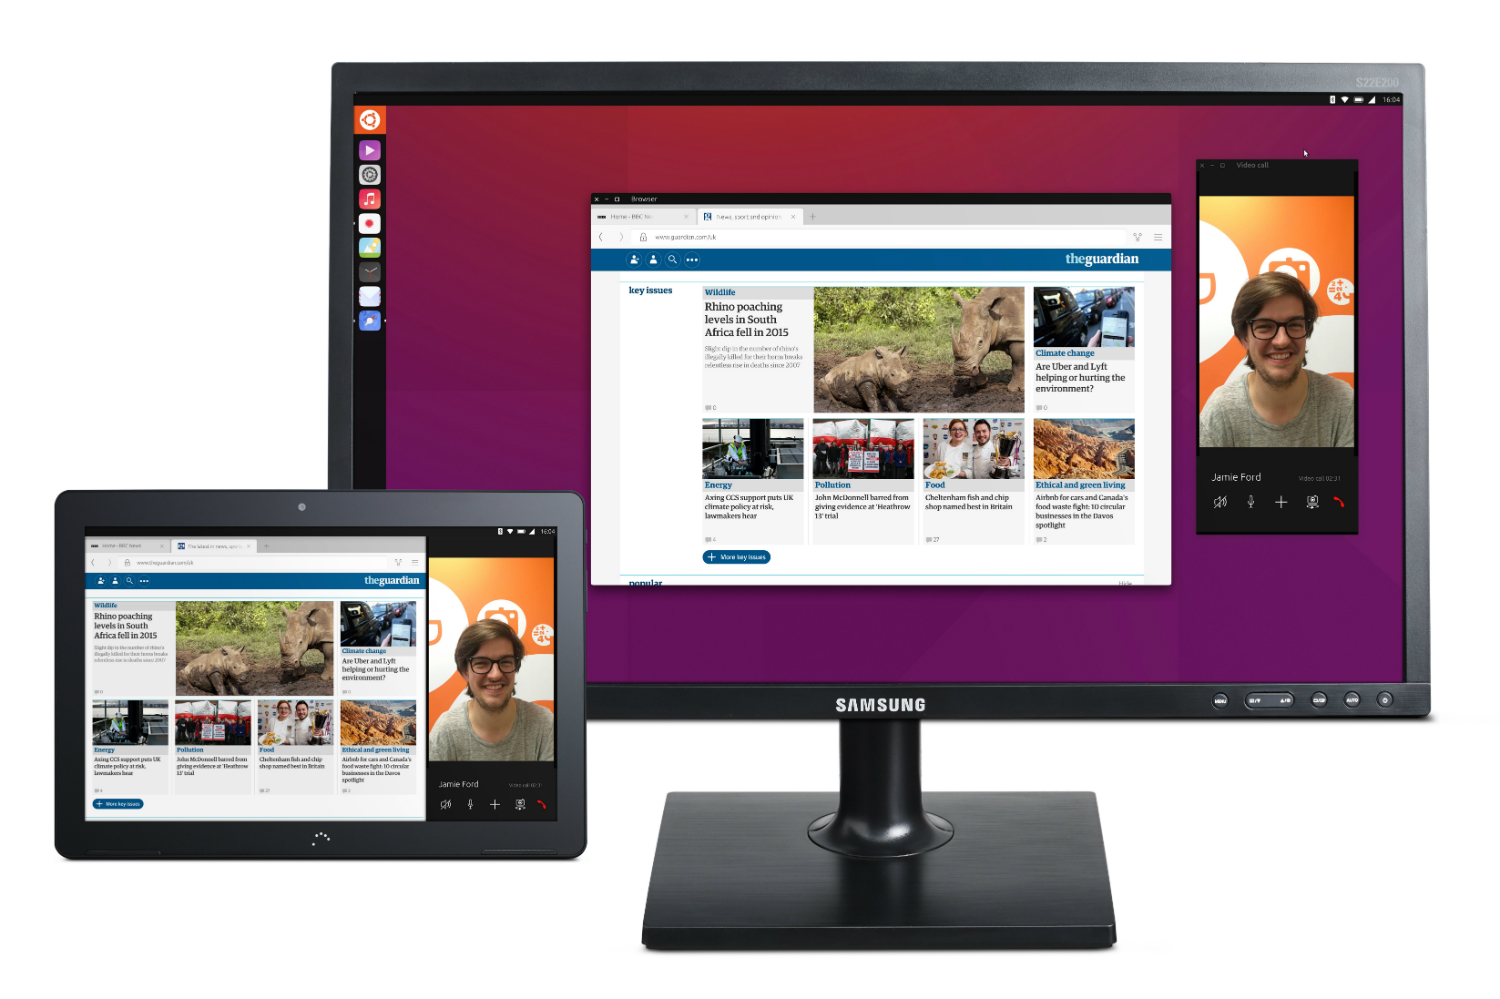 bq aquaris m10 ubuntu edition tablet news m1 desktop